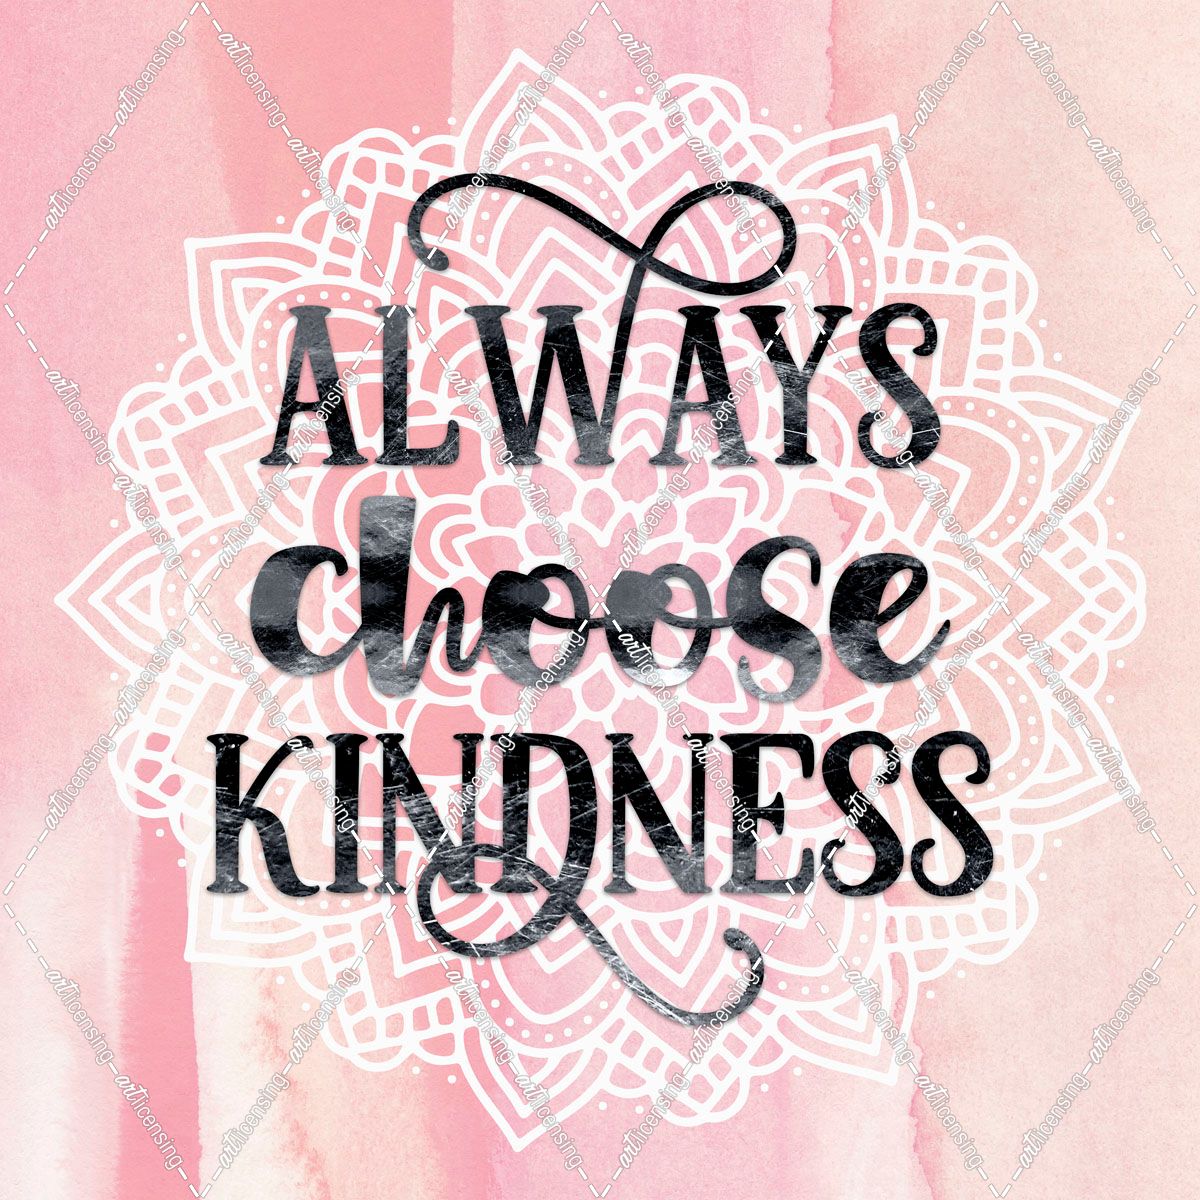 Always Choose Kindness